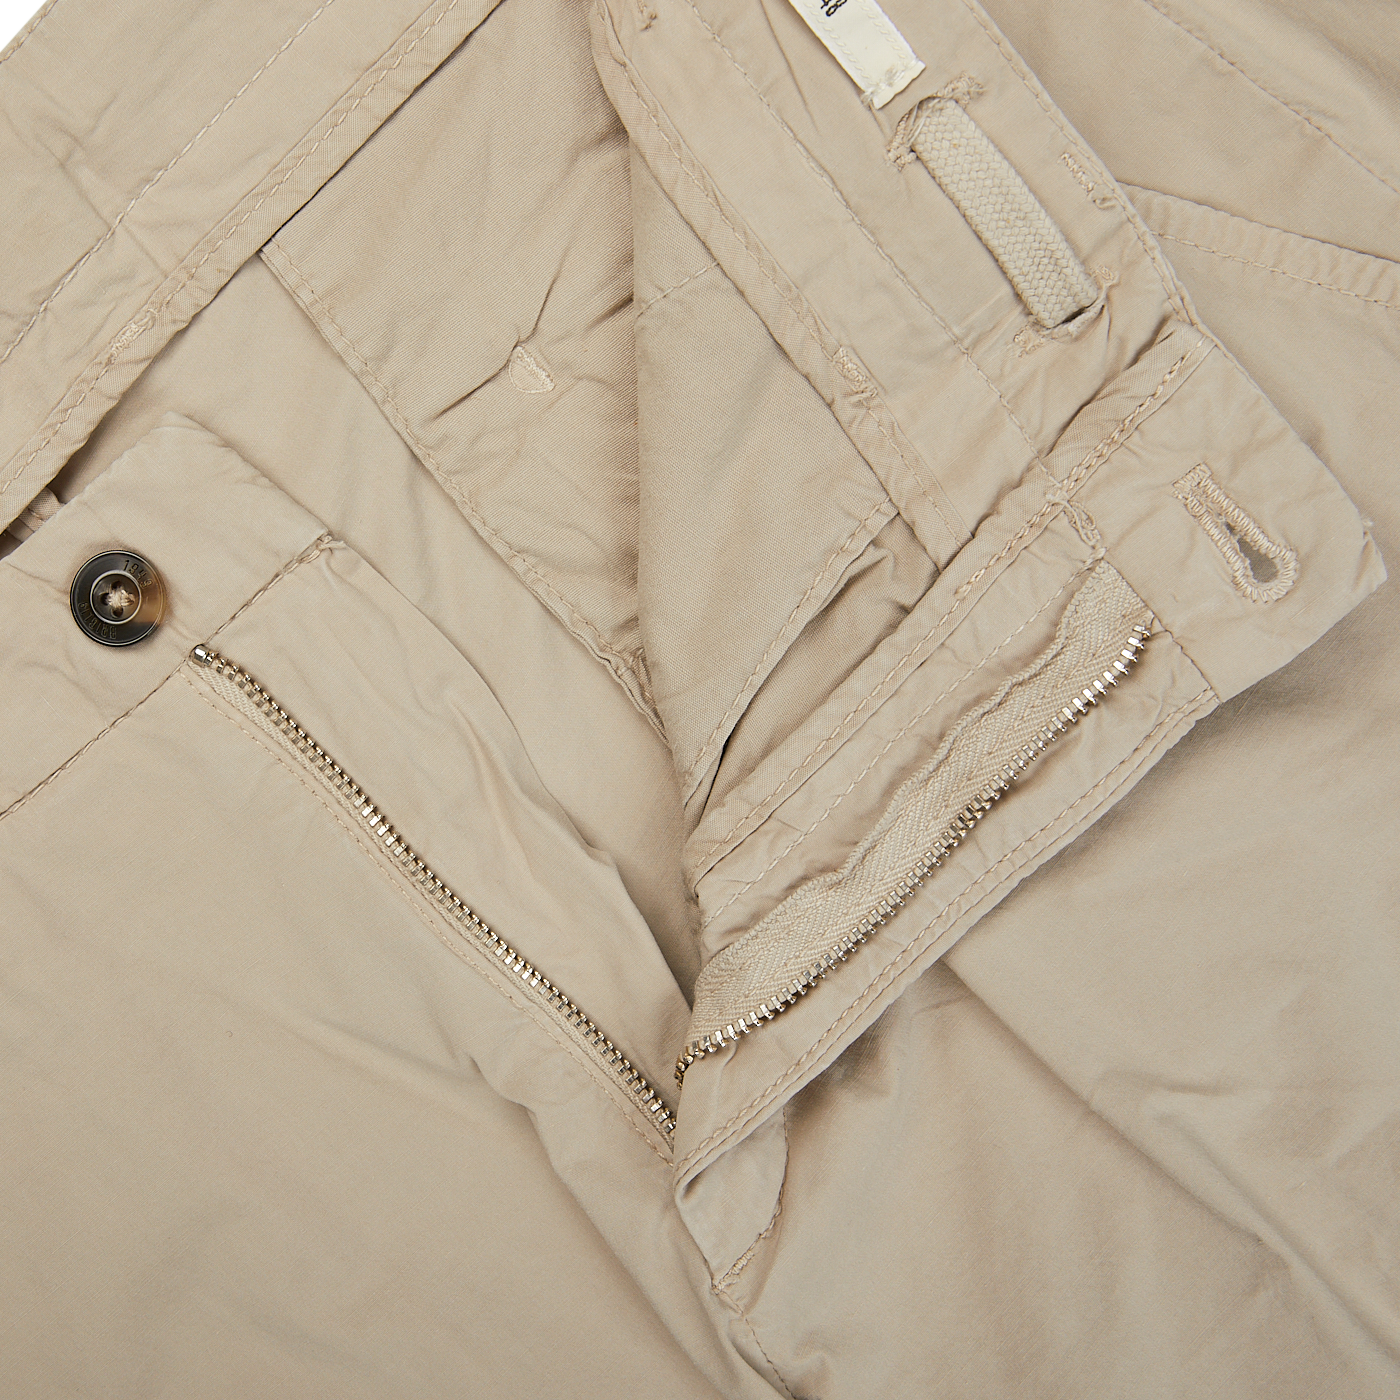 Close-up of Briglia beige cotton jacket with a zipper detail.